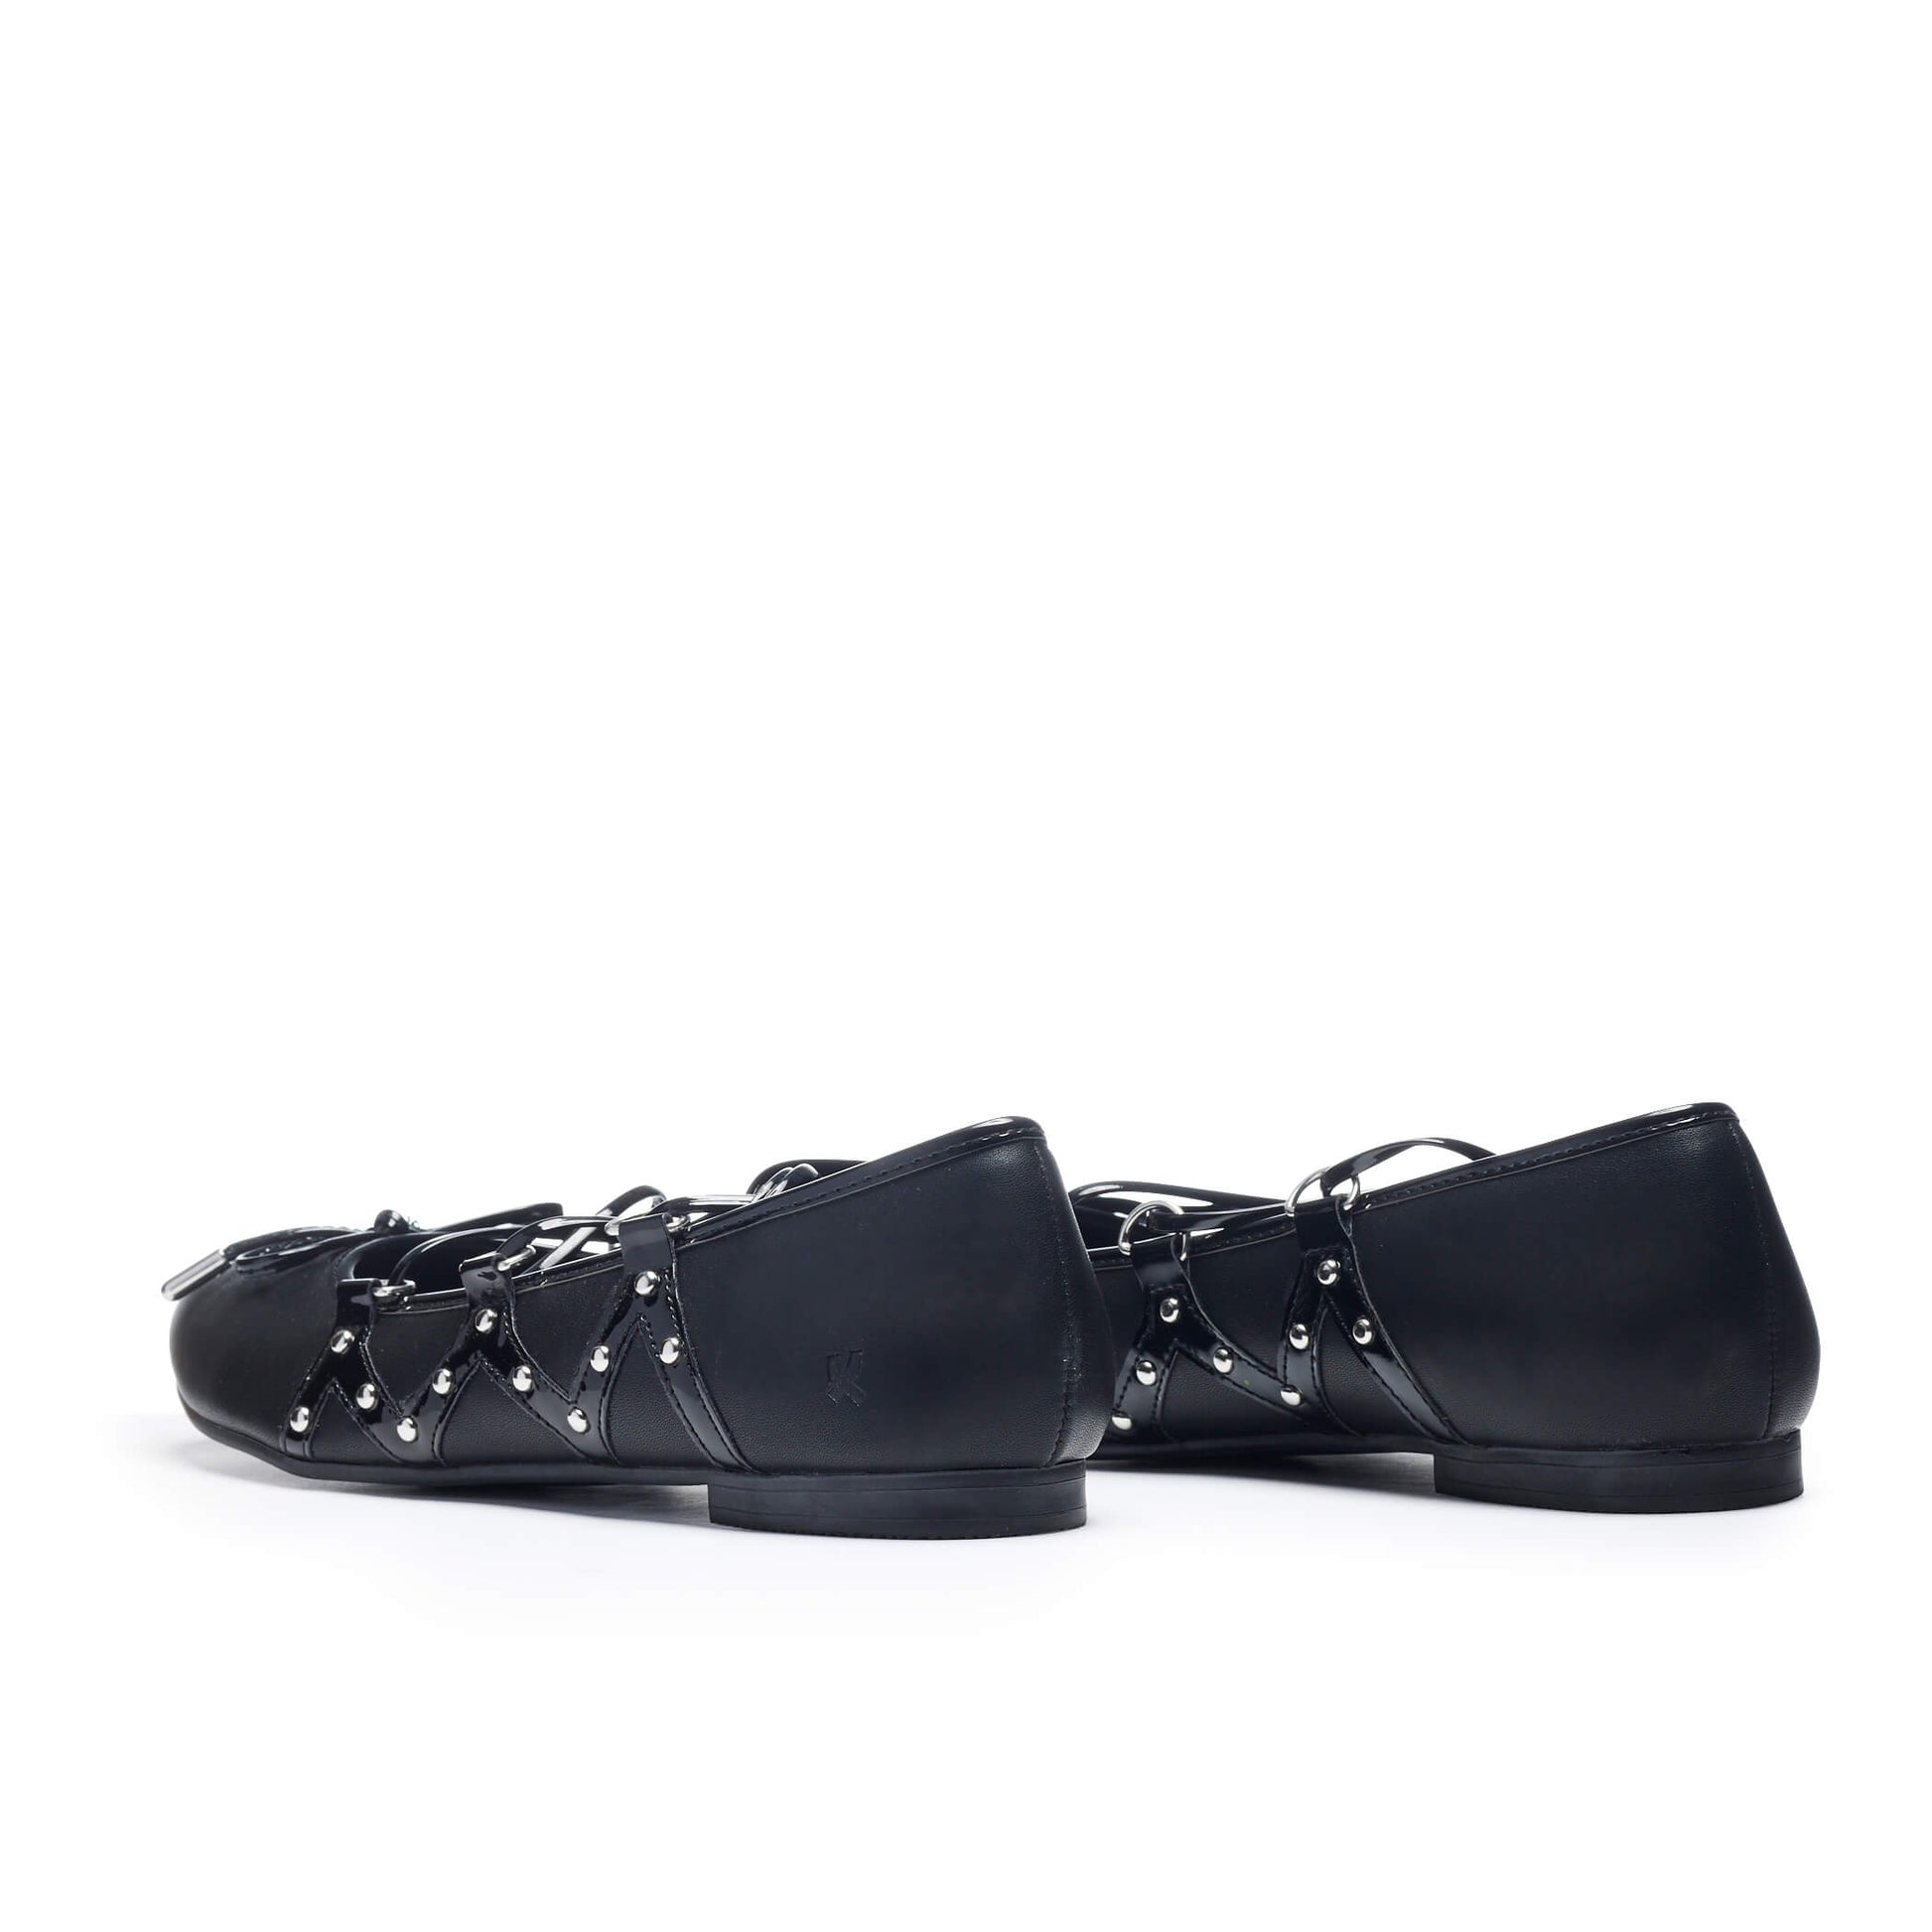 Violetta Grunge Lace Up Ballet Flat Shoes - Black - Koi Footwear - Back View